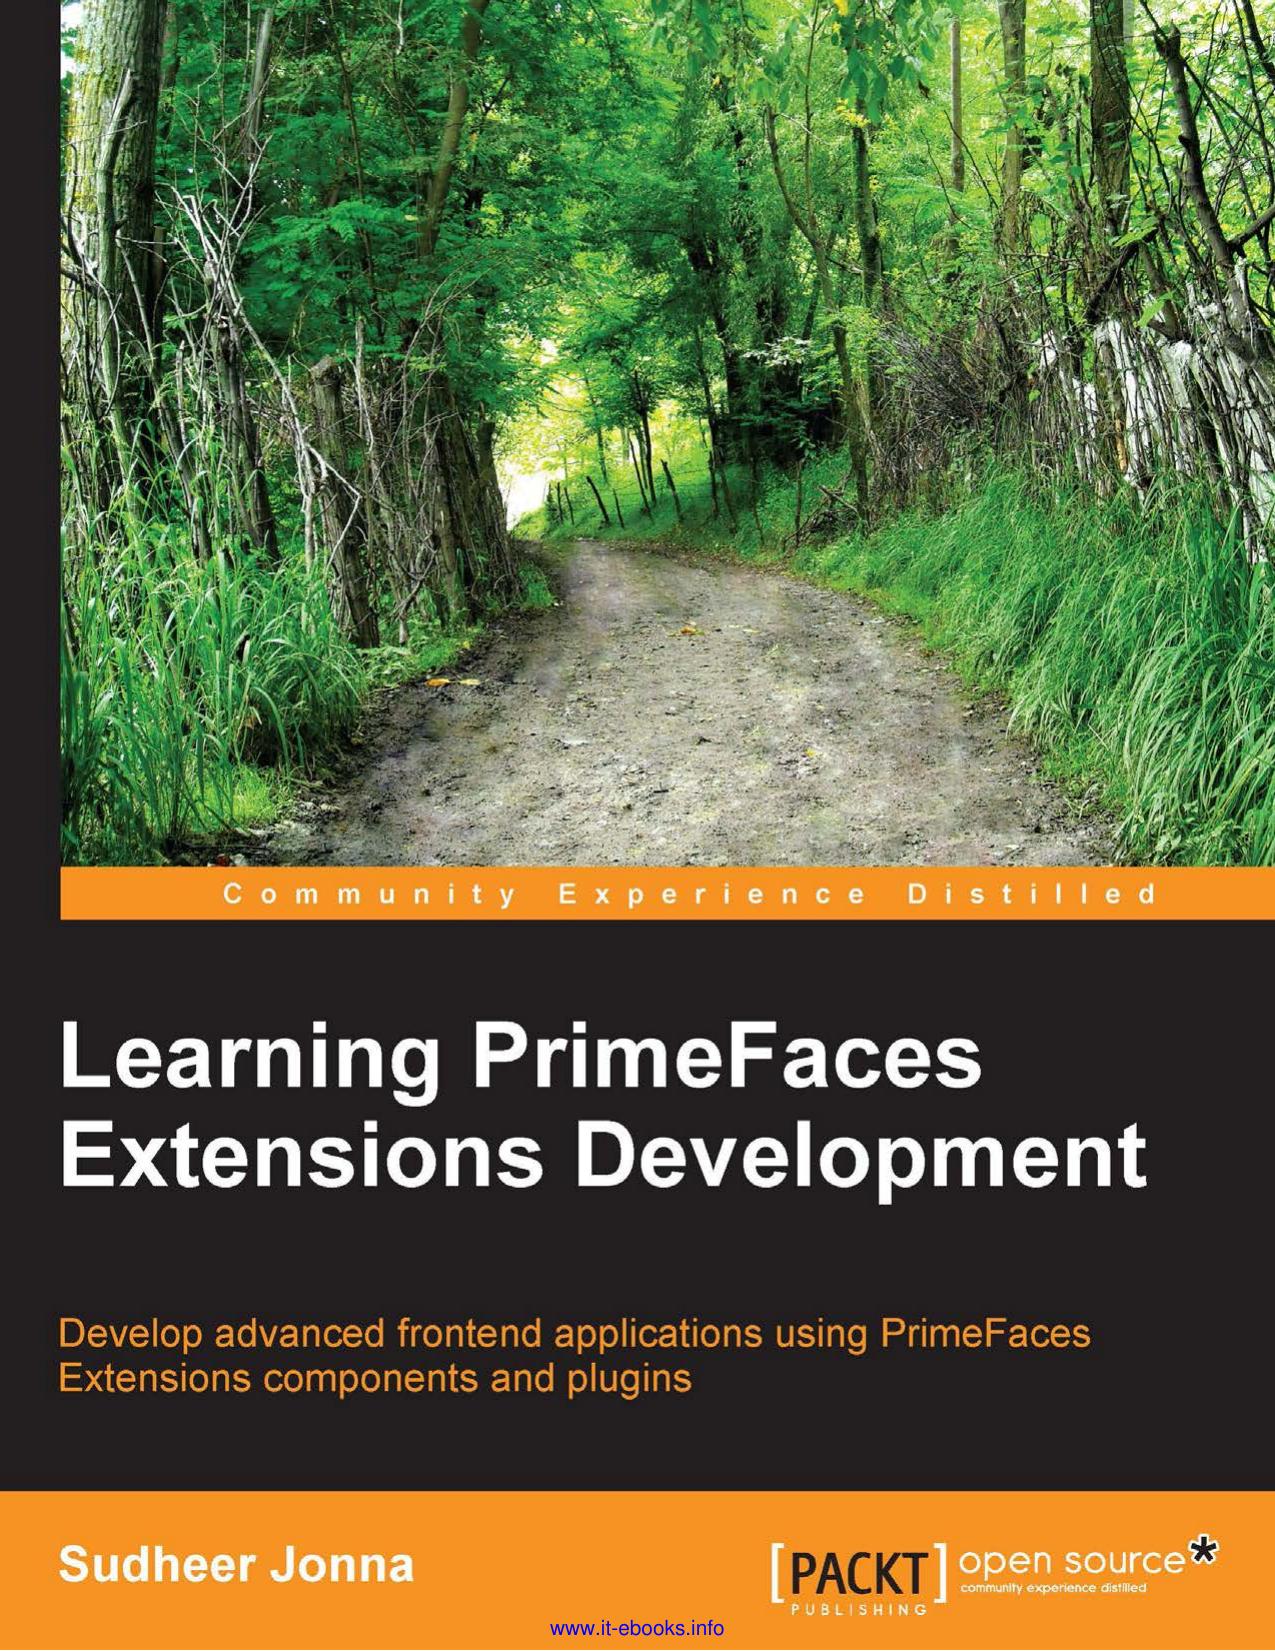 Learning PrimeFaces Extensions Development 2014